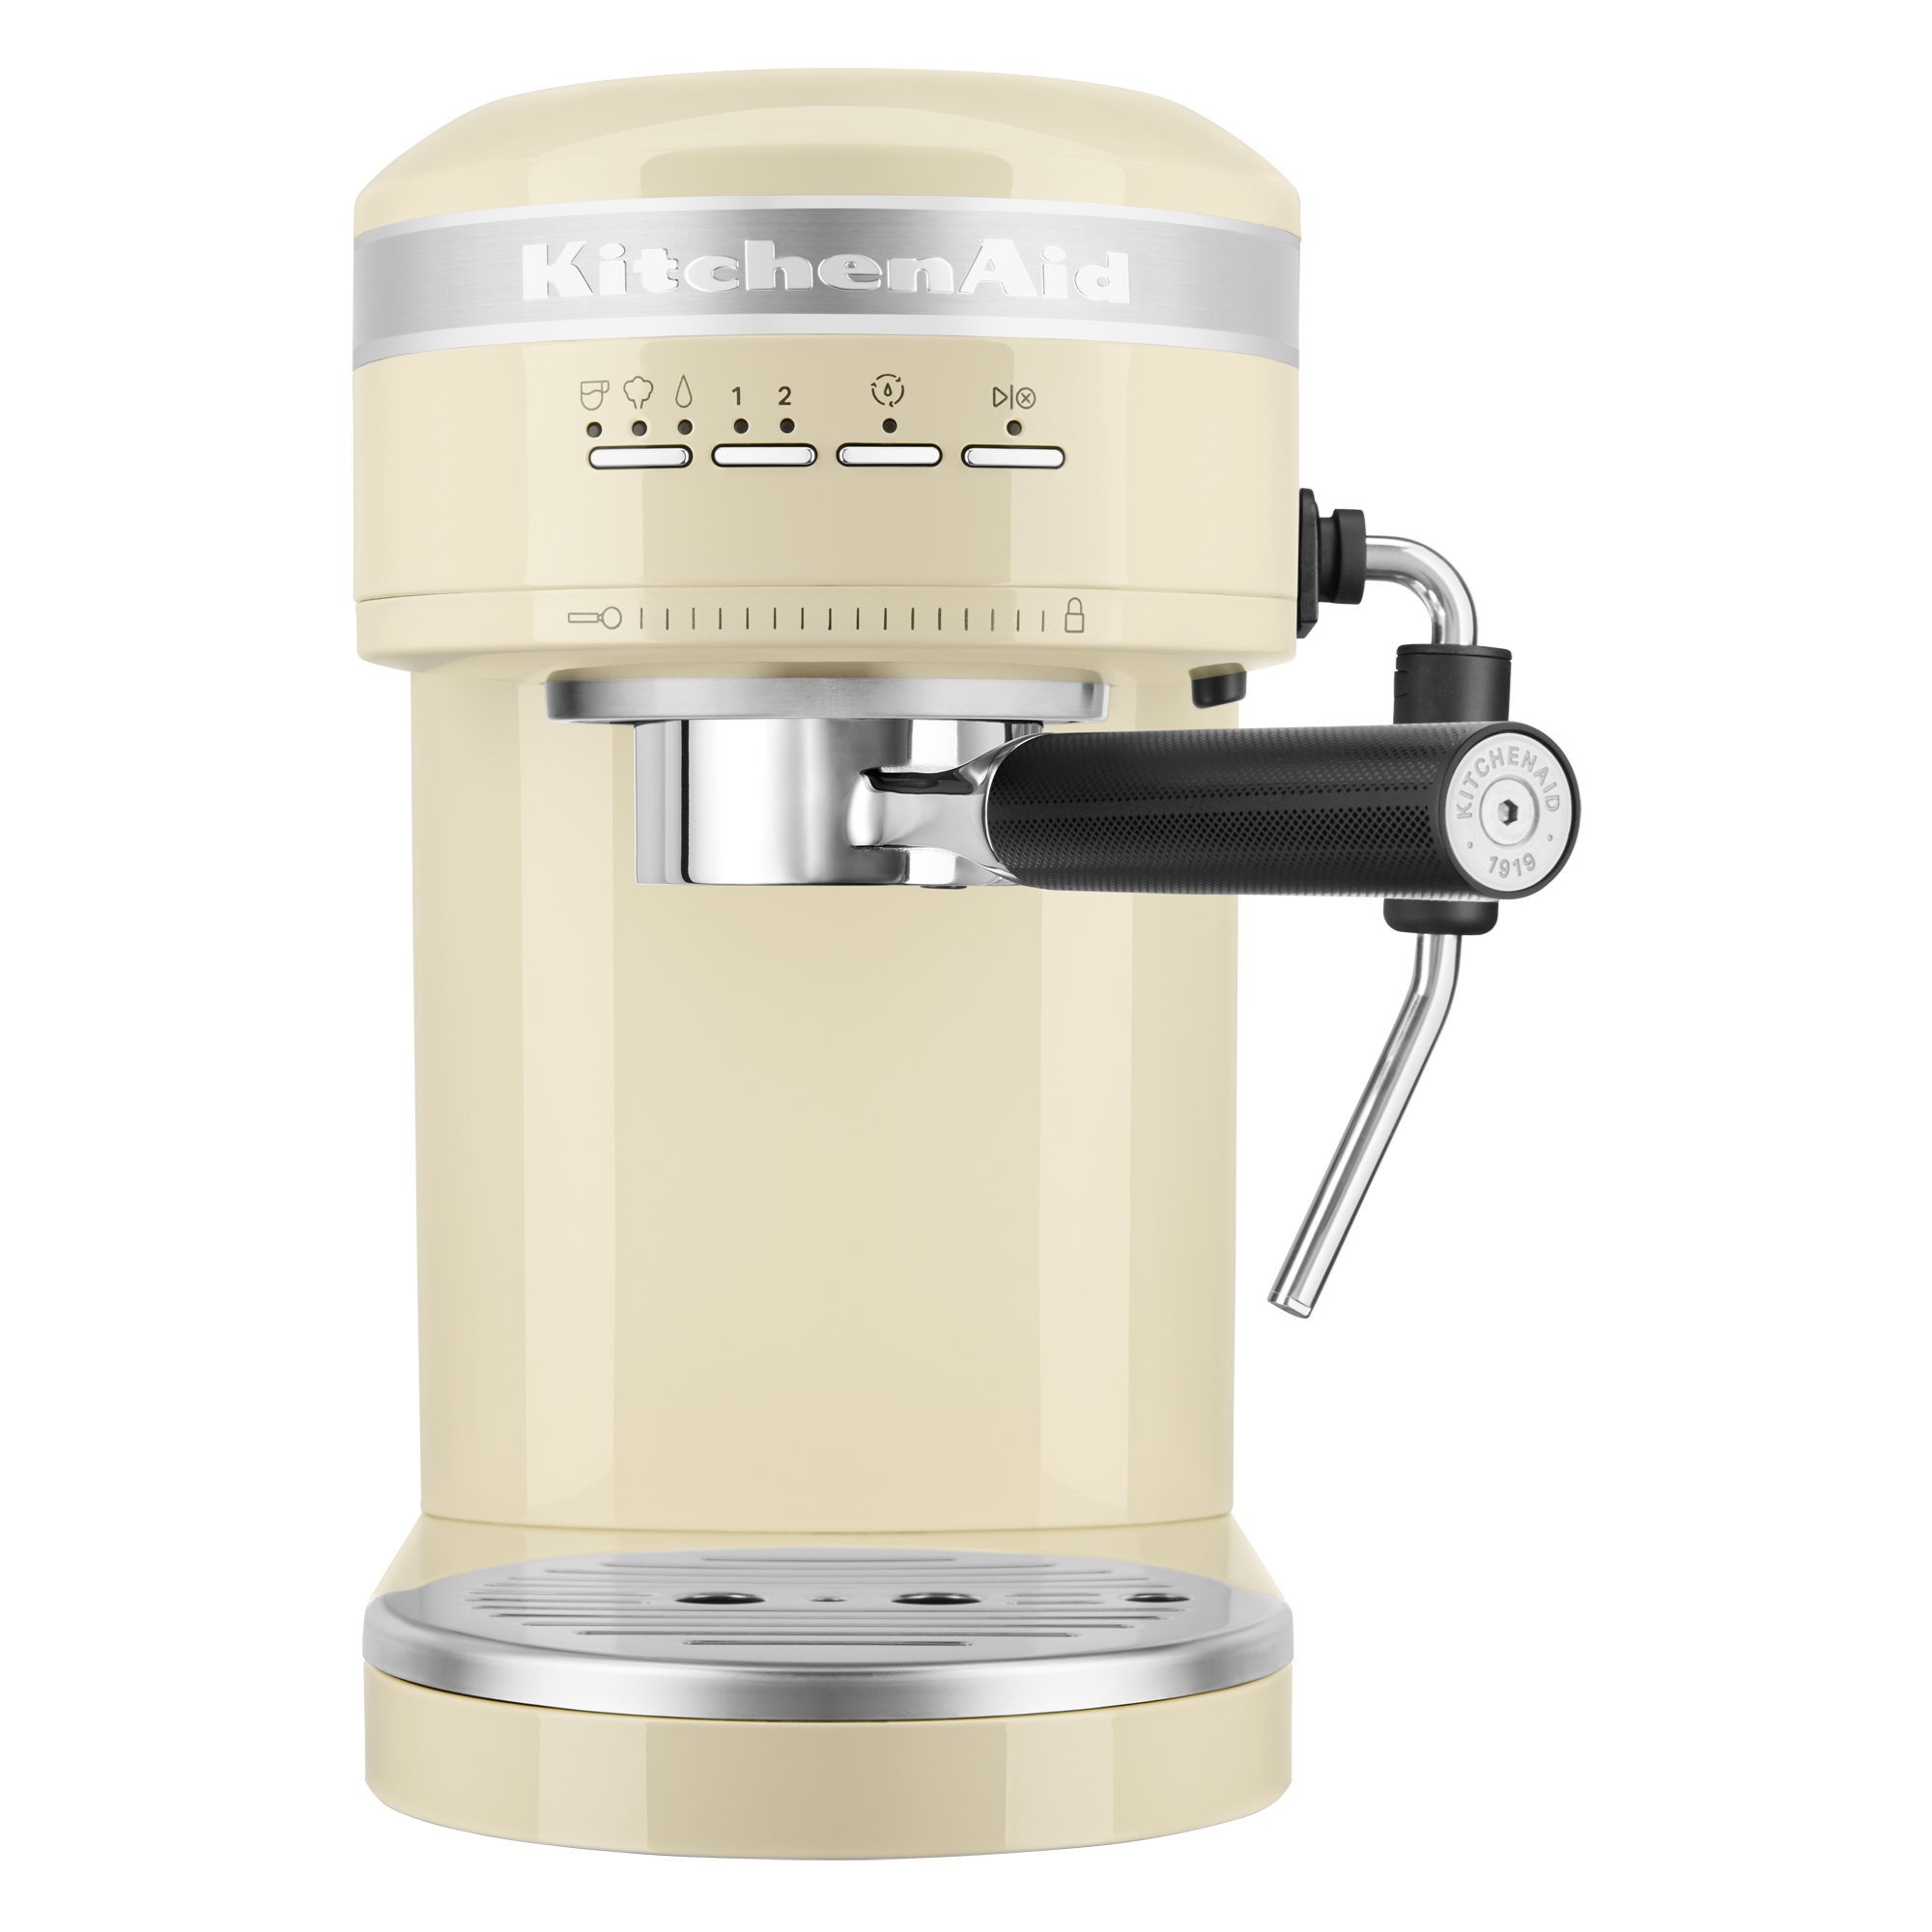 Artisan electric espresso machine, 1470W, Almond Cream color - KitchenAid  brand